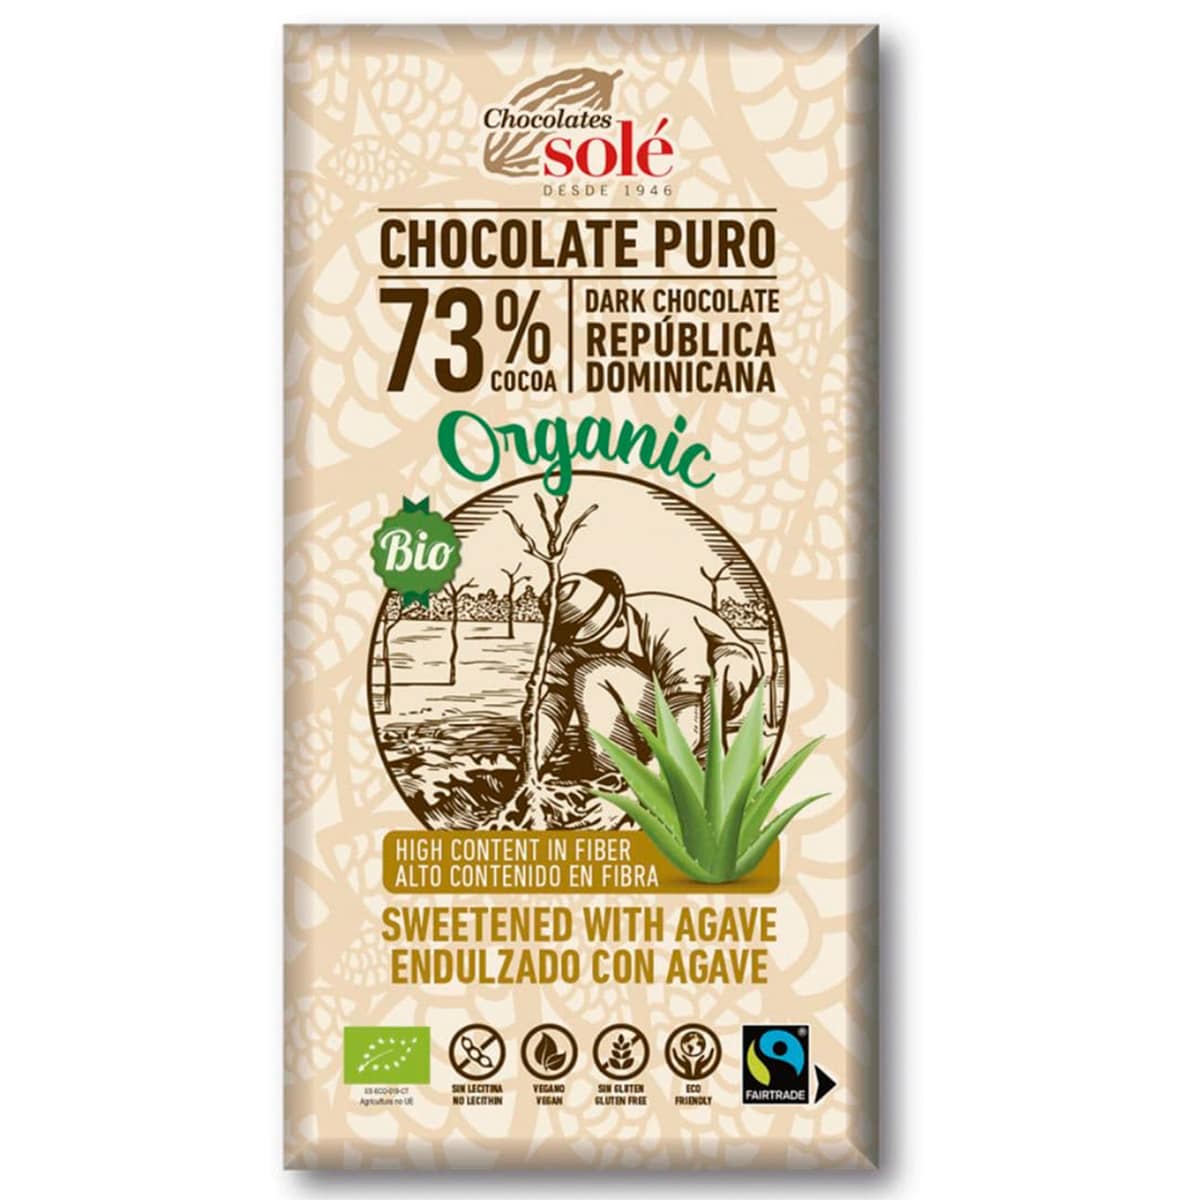 Chocolate puro endulzado con Agave, 73% Cacao